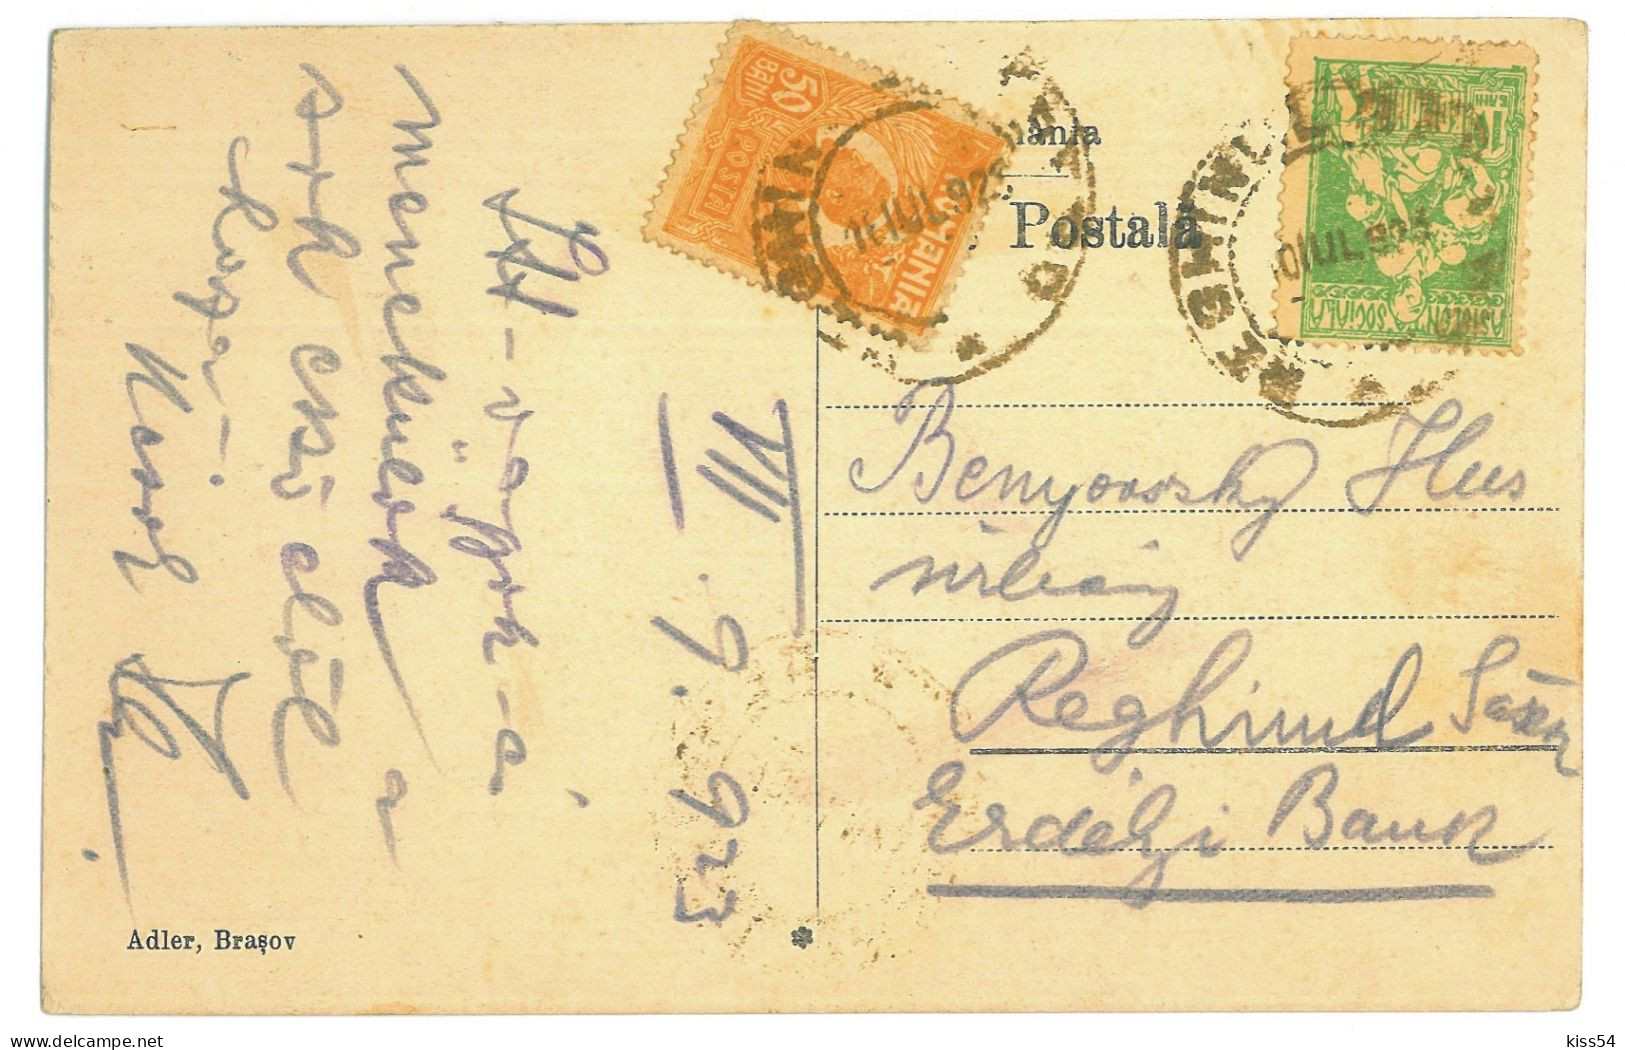 RO 47 - 23735 TUSNAD, Harghita, Multi Vue, Romania - Old Postcard - Used - 1923 - Roumanie